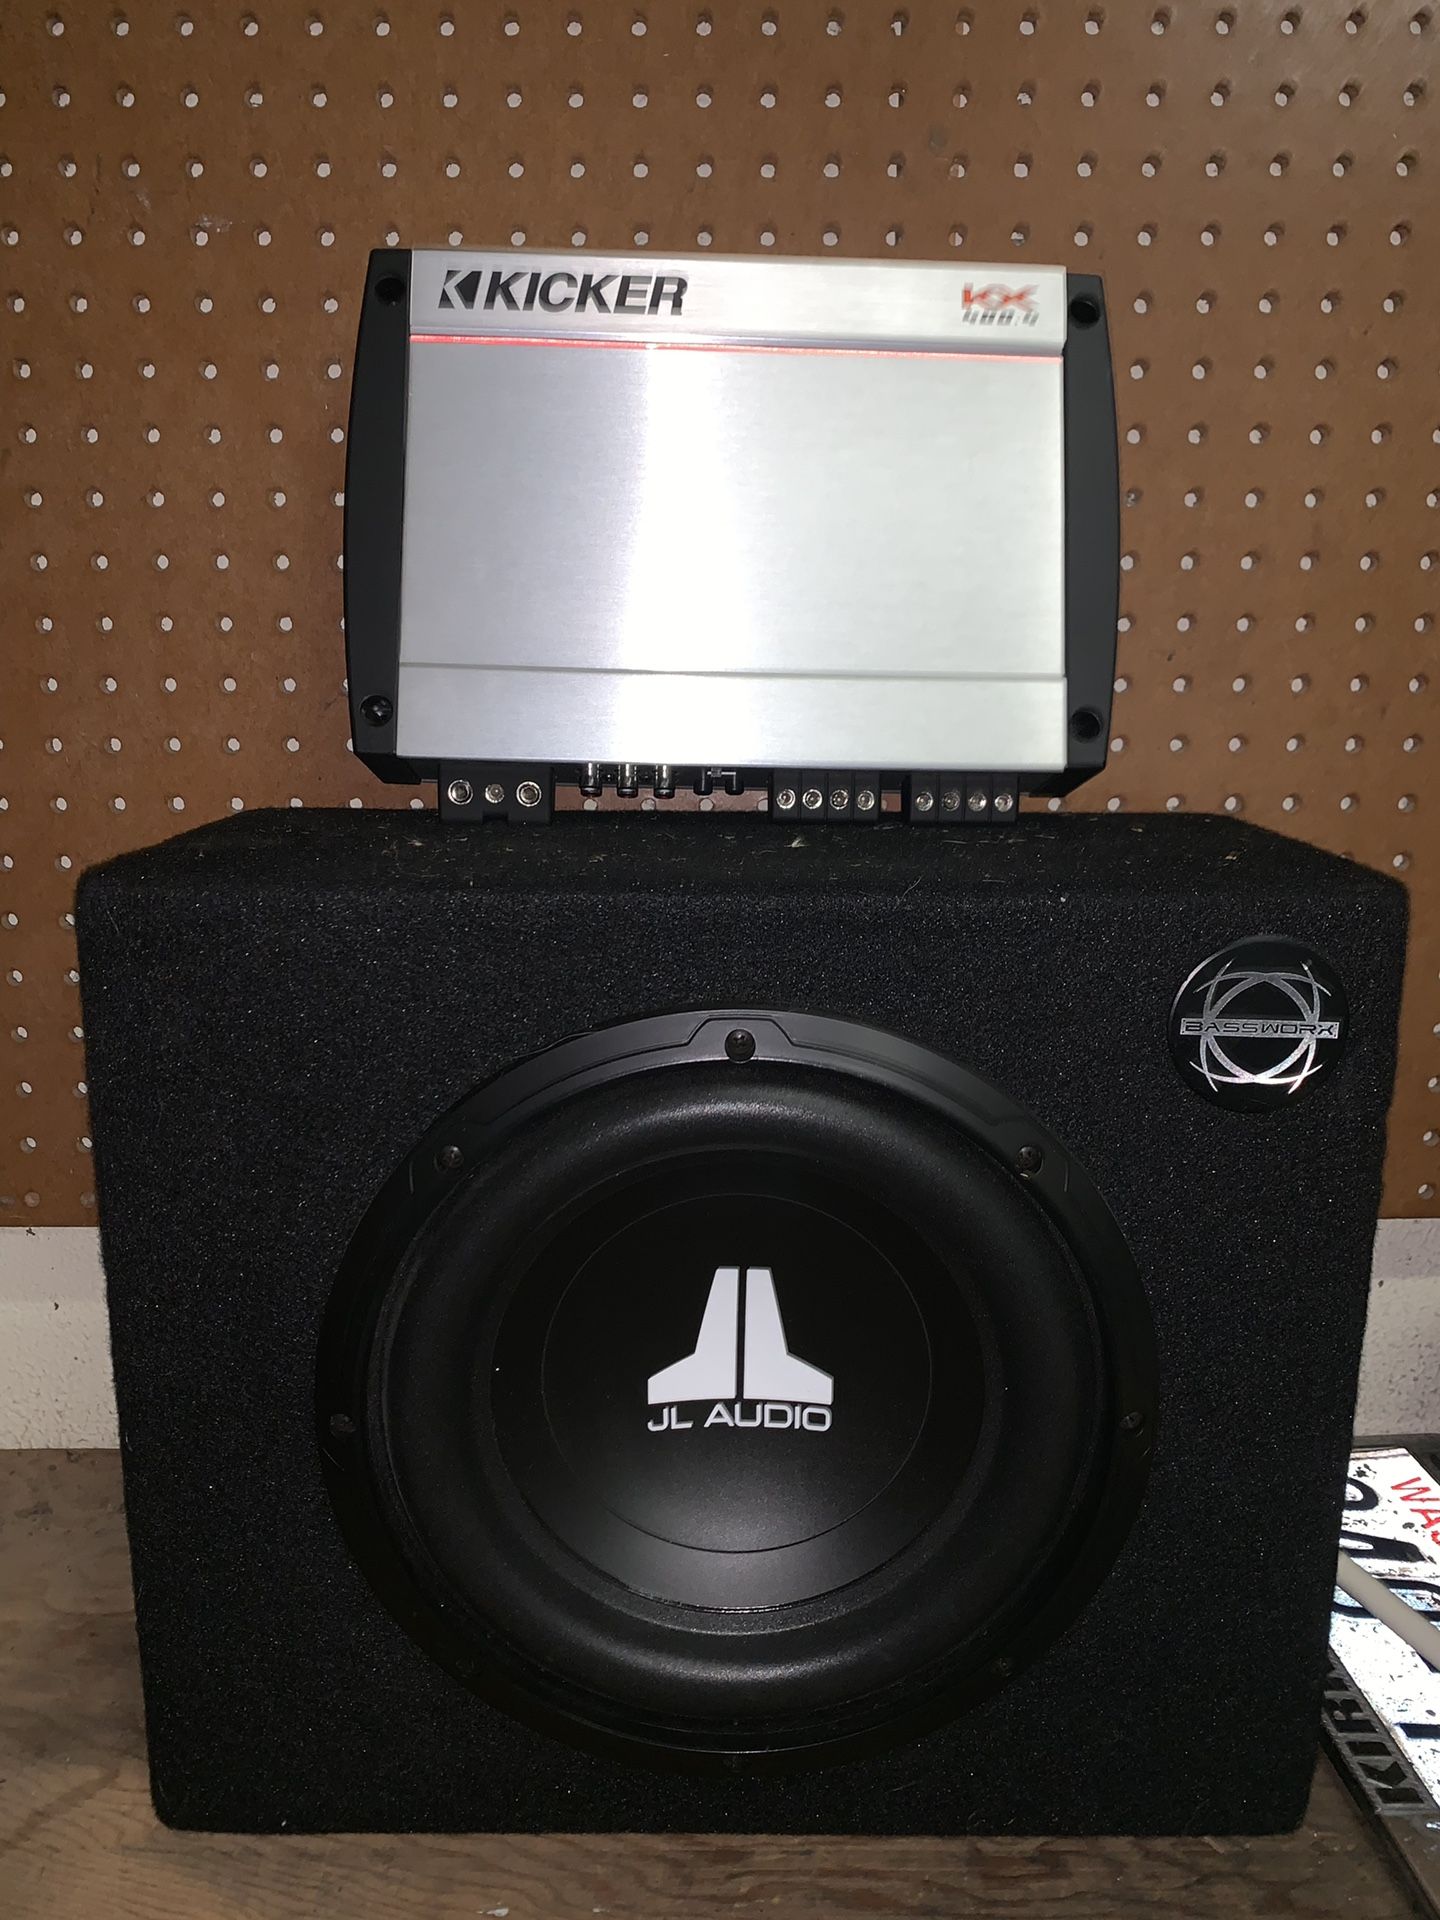 Amplifier: Kicker 400.4 and JBL Subwoofer